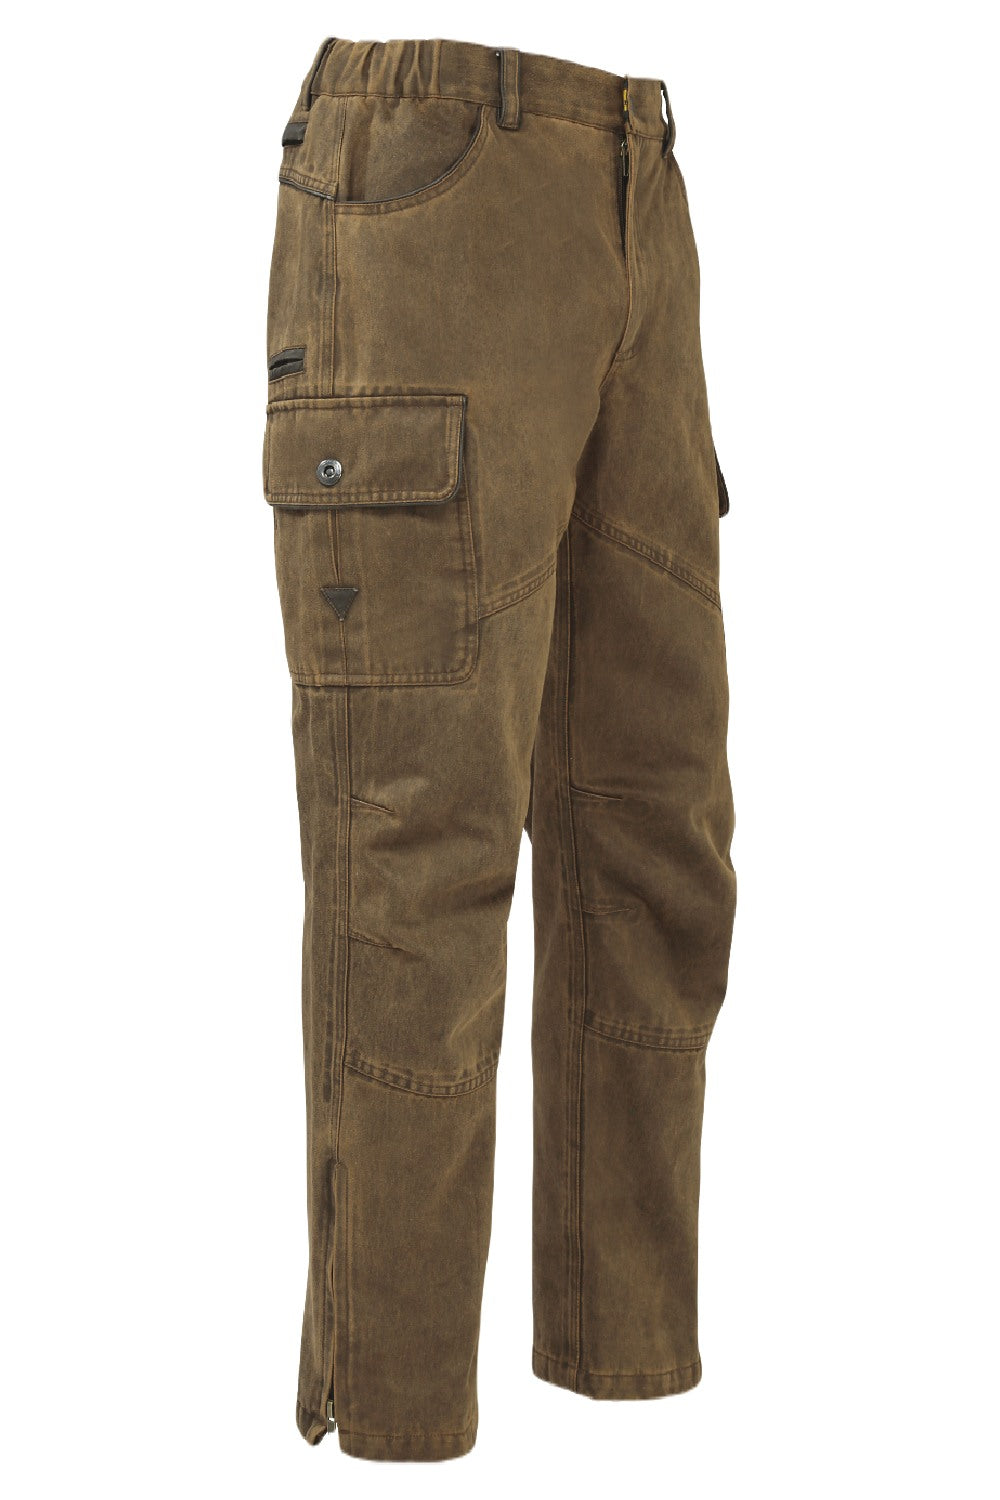 Verney Carron Fox Evo Original Waterproof Trousers in Brown